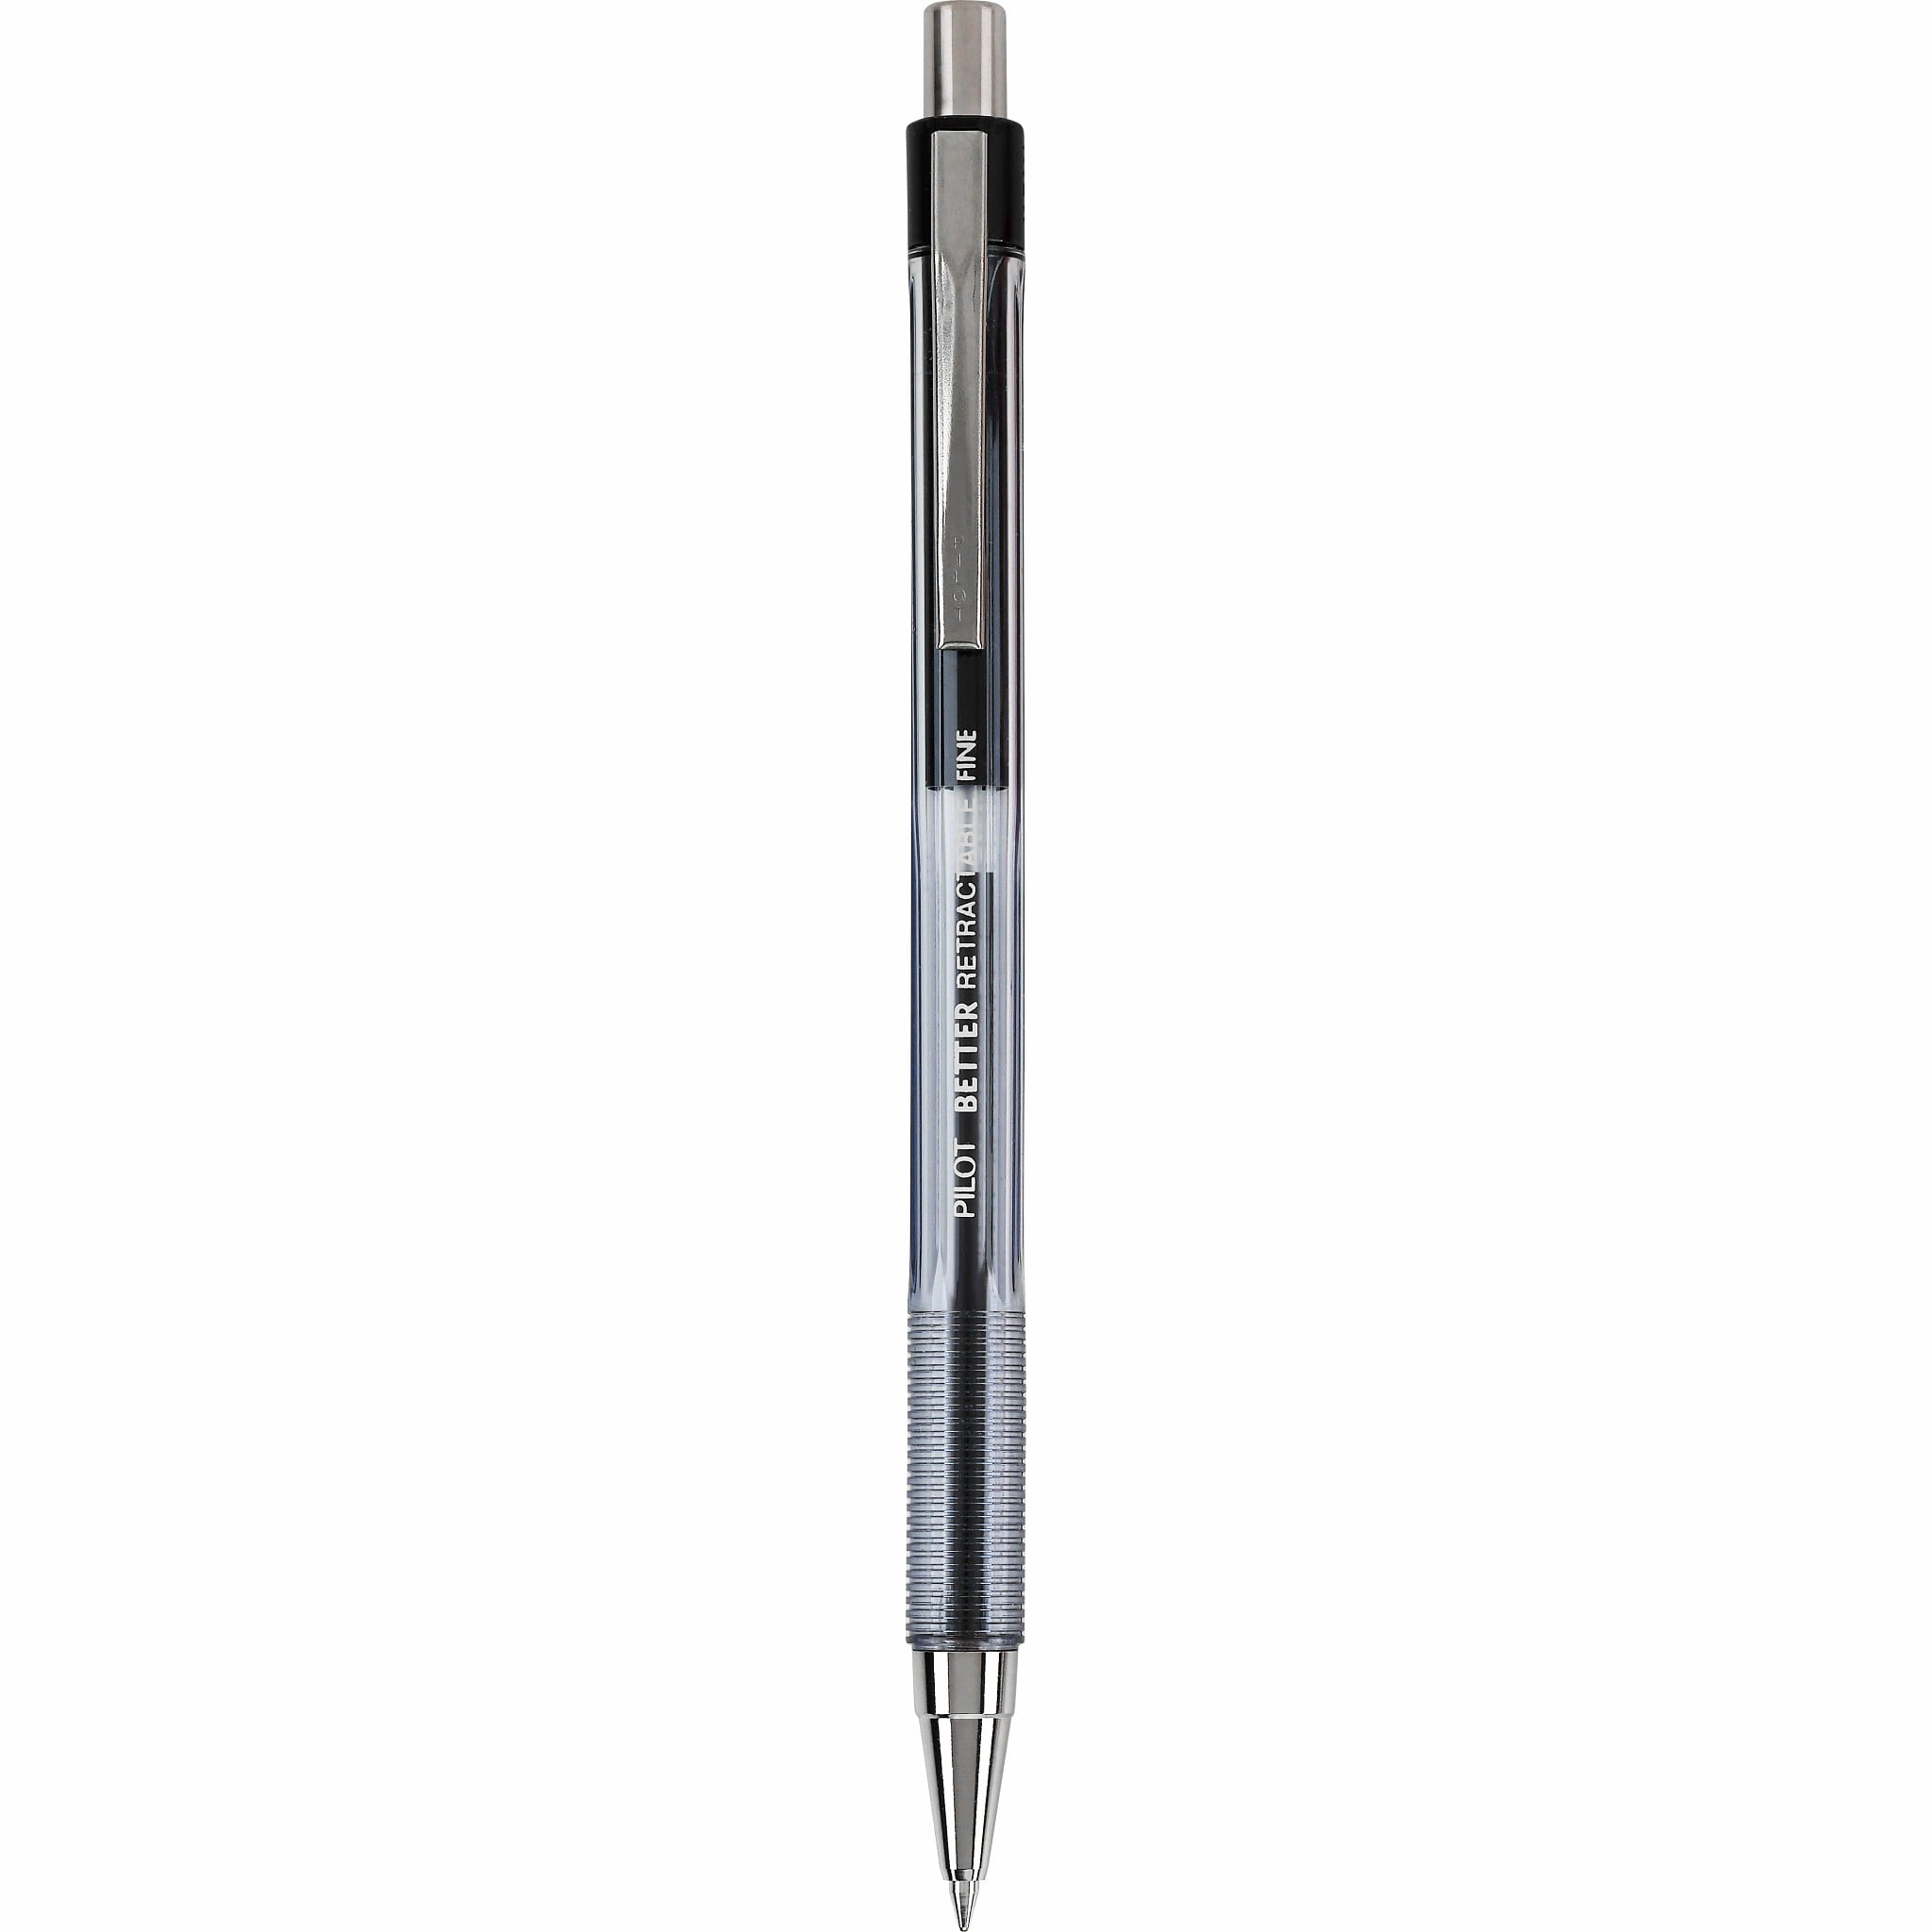 PILOT The Better Ball Point Pen Refillable /& Retractable Ballpoint Pens 1 12 Count Black Ink Fine Point